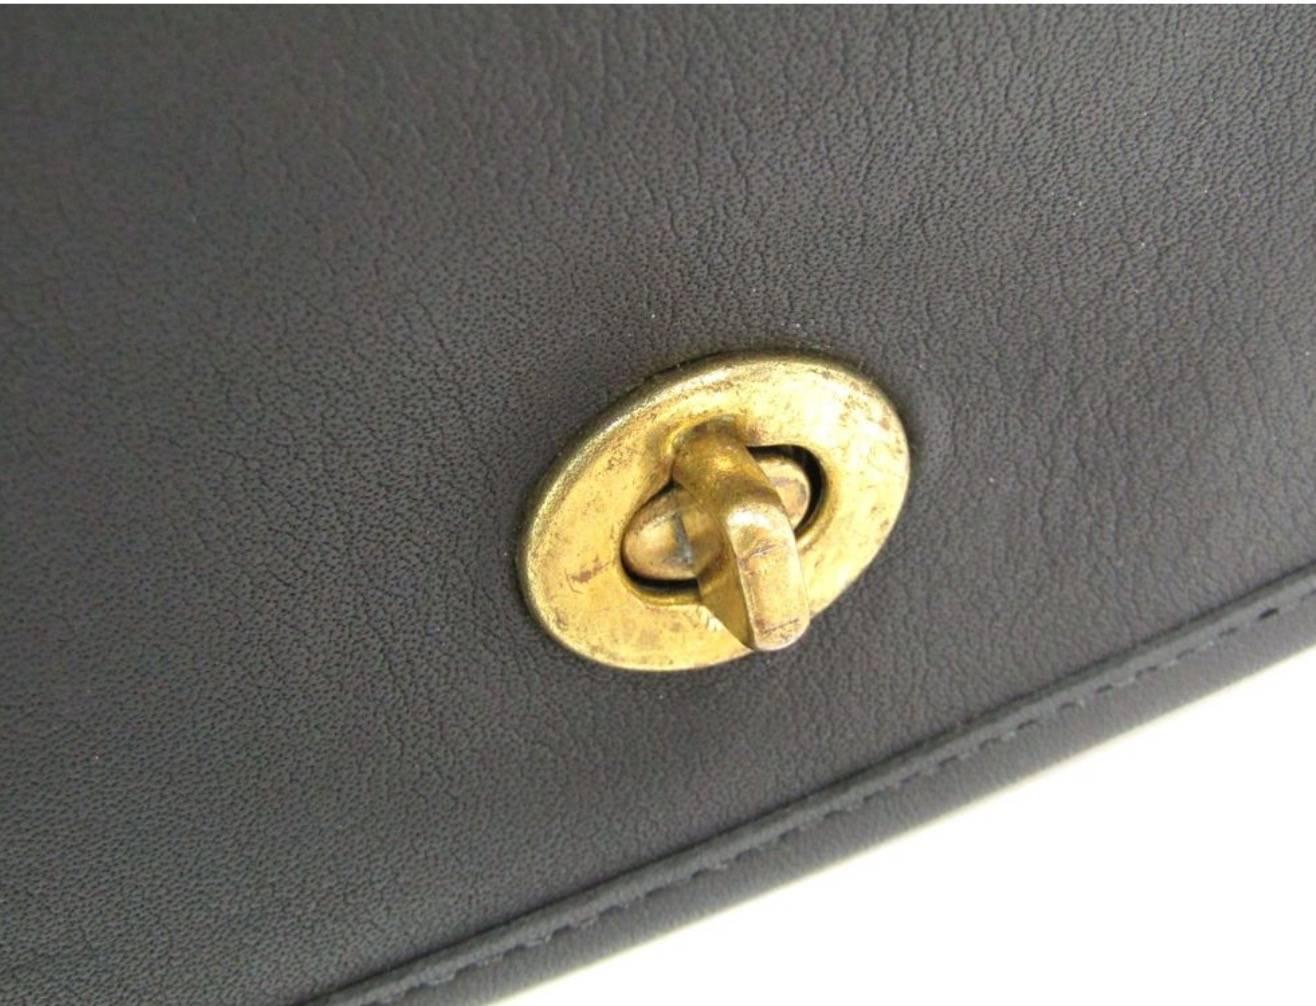 Coach Vintage Archive Black Leather Saddle Crossbody Shoulder Flap Bag

Leather
Gold tone hardware
Turnlock closure
Made in United States
Adjustable shoulder strap drop 39-42.5"
Measures 11" W x 8.75" H x 4" D 
Includes original